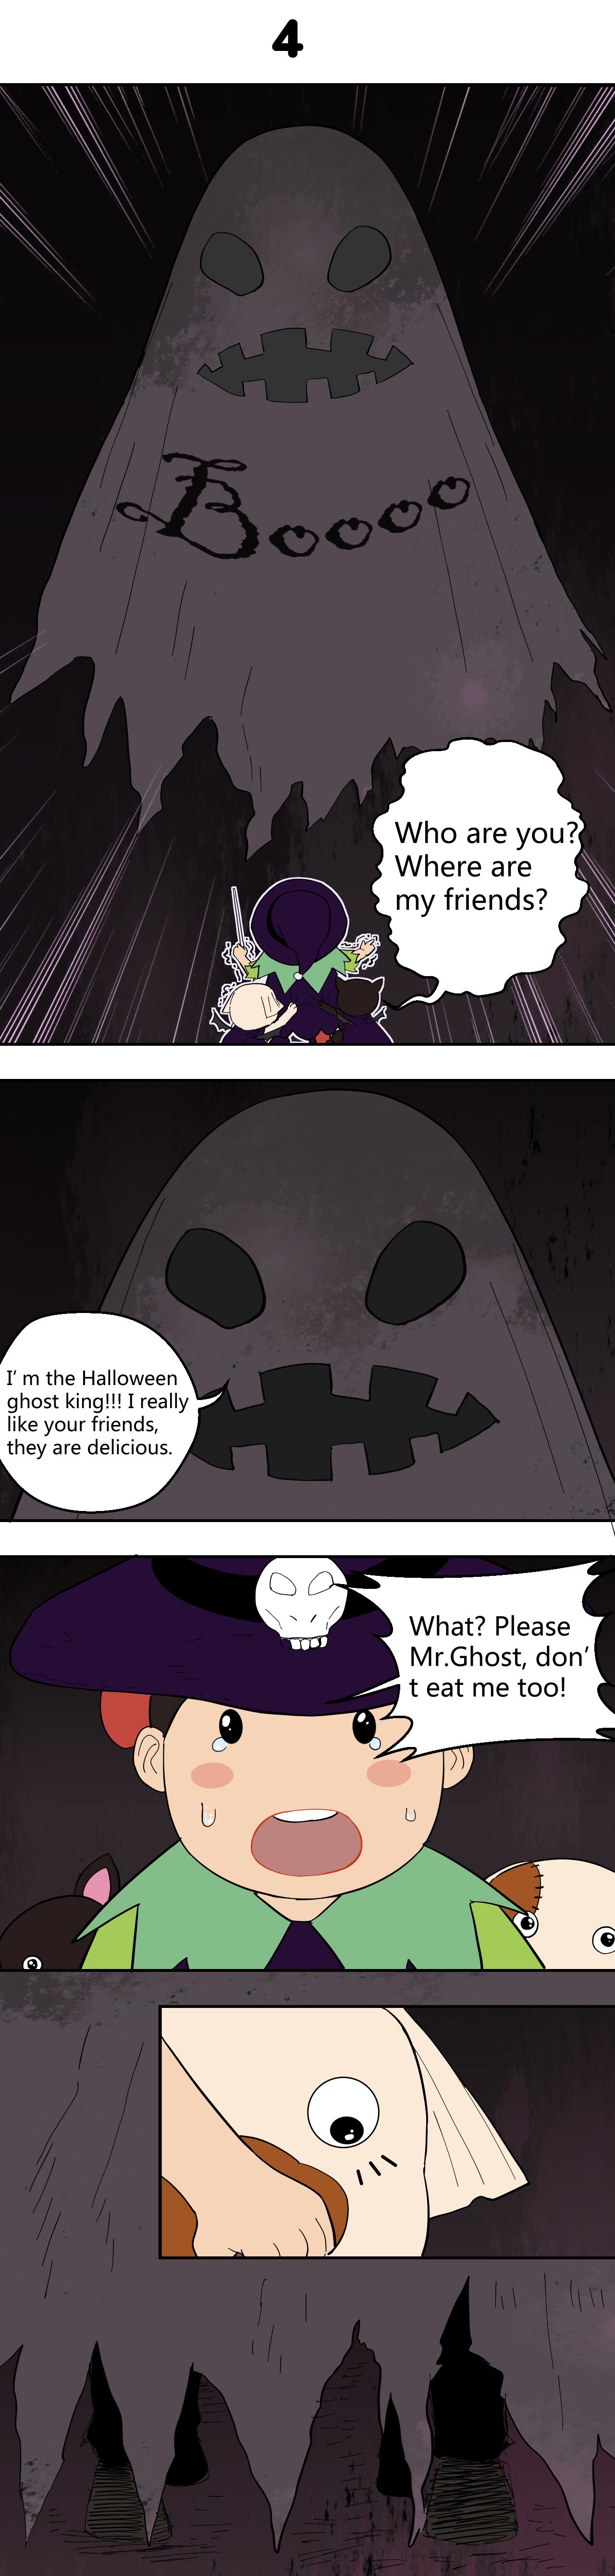 Halloween Party Magic Globe Comic